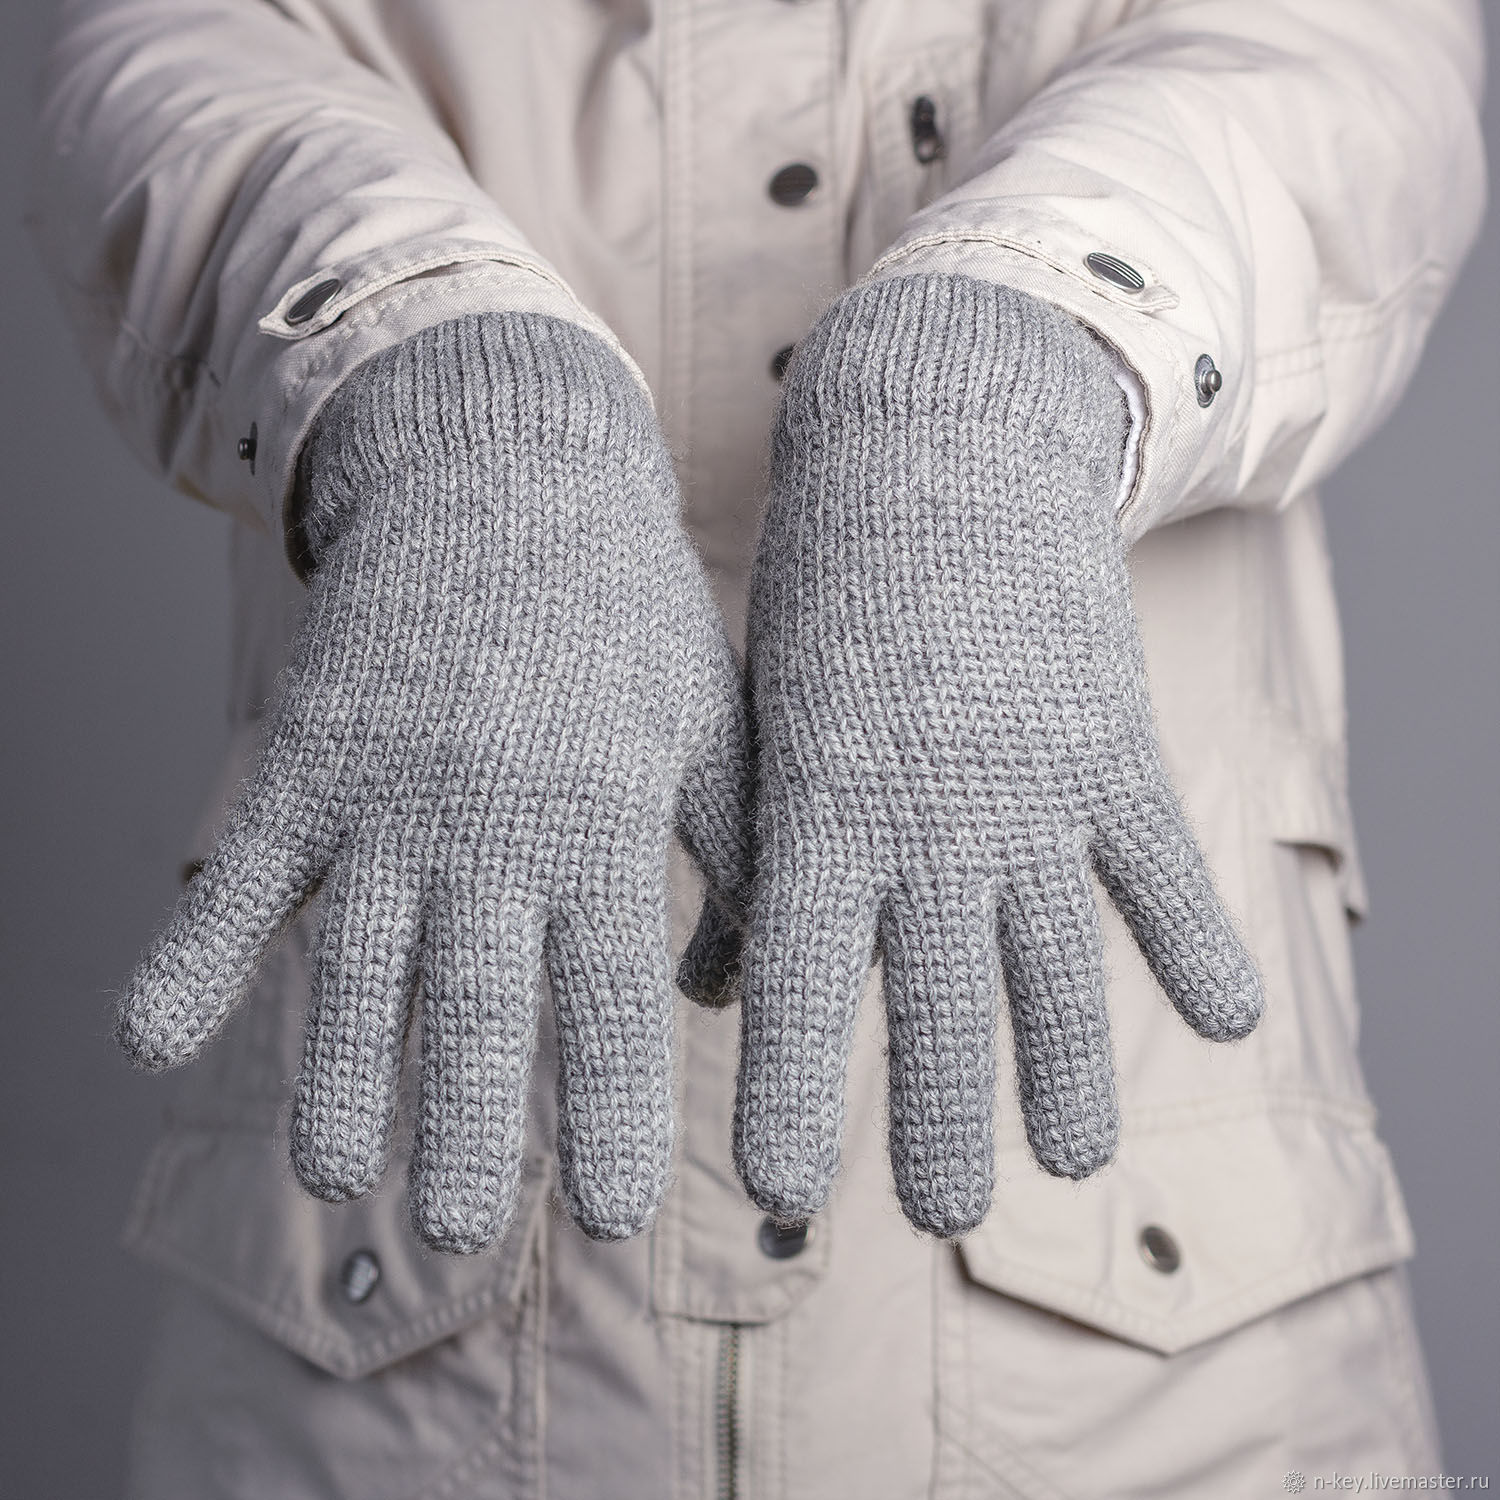 Вяжем простые перчатки🧤// Подробный мастер-класс//Simple gloves knitting pattern #наталиябыстрова